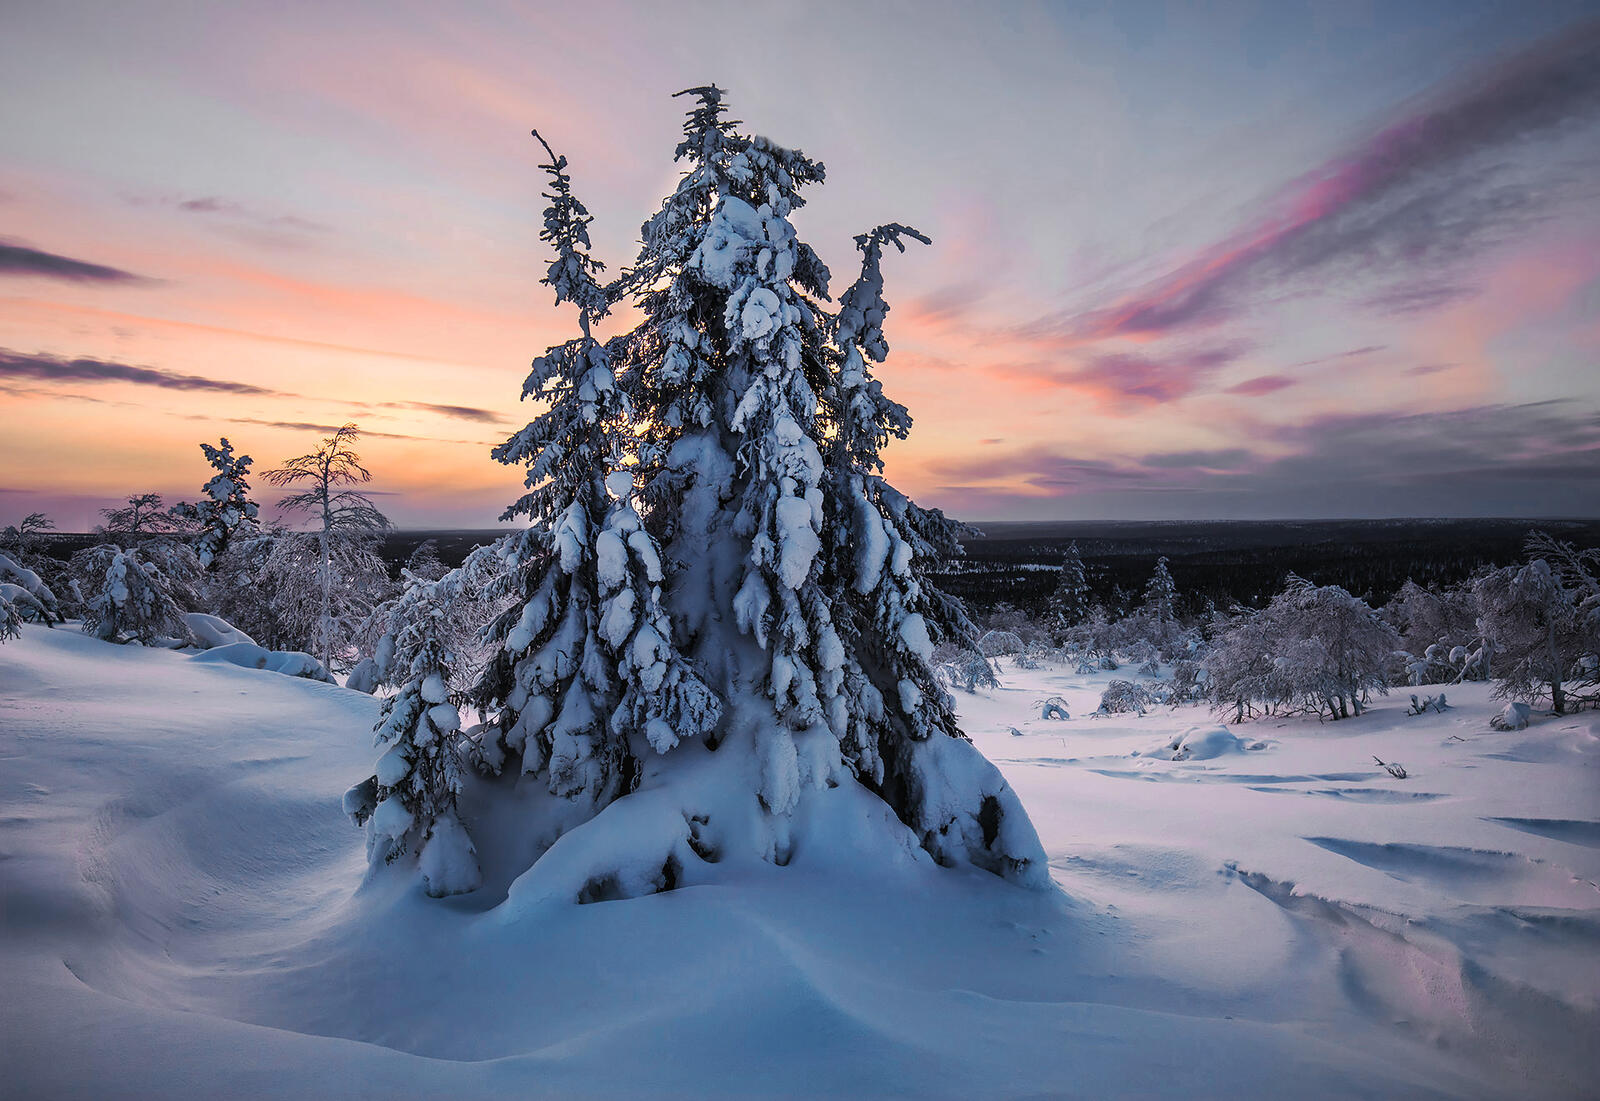 Wallpapers snow Finland landscape on the desktop